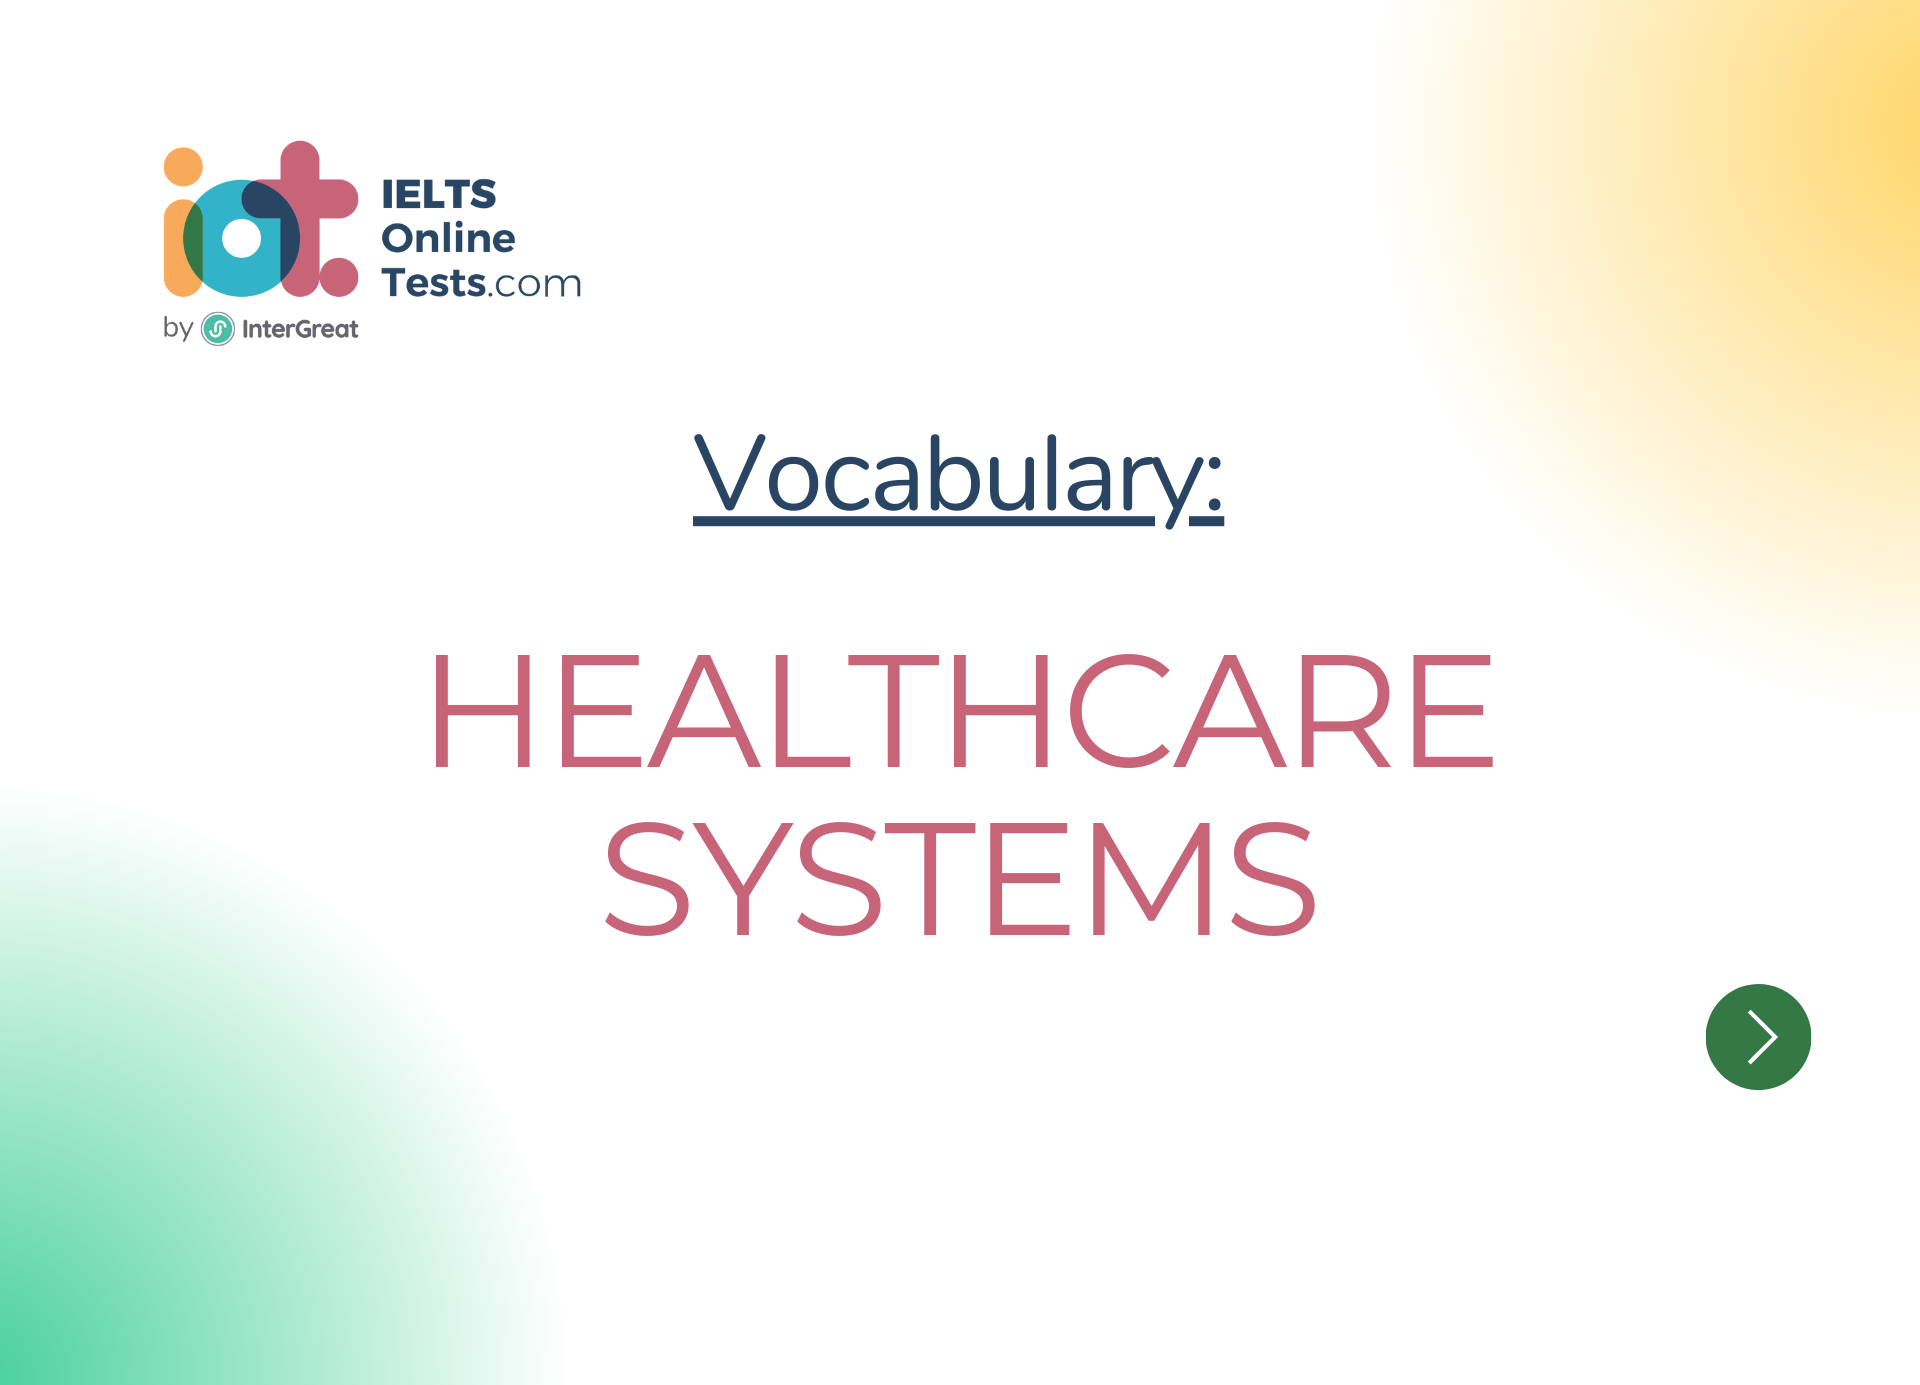 Hệ thống chăm sóc sức khỏe (Healthcare systems)